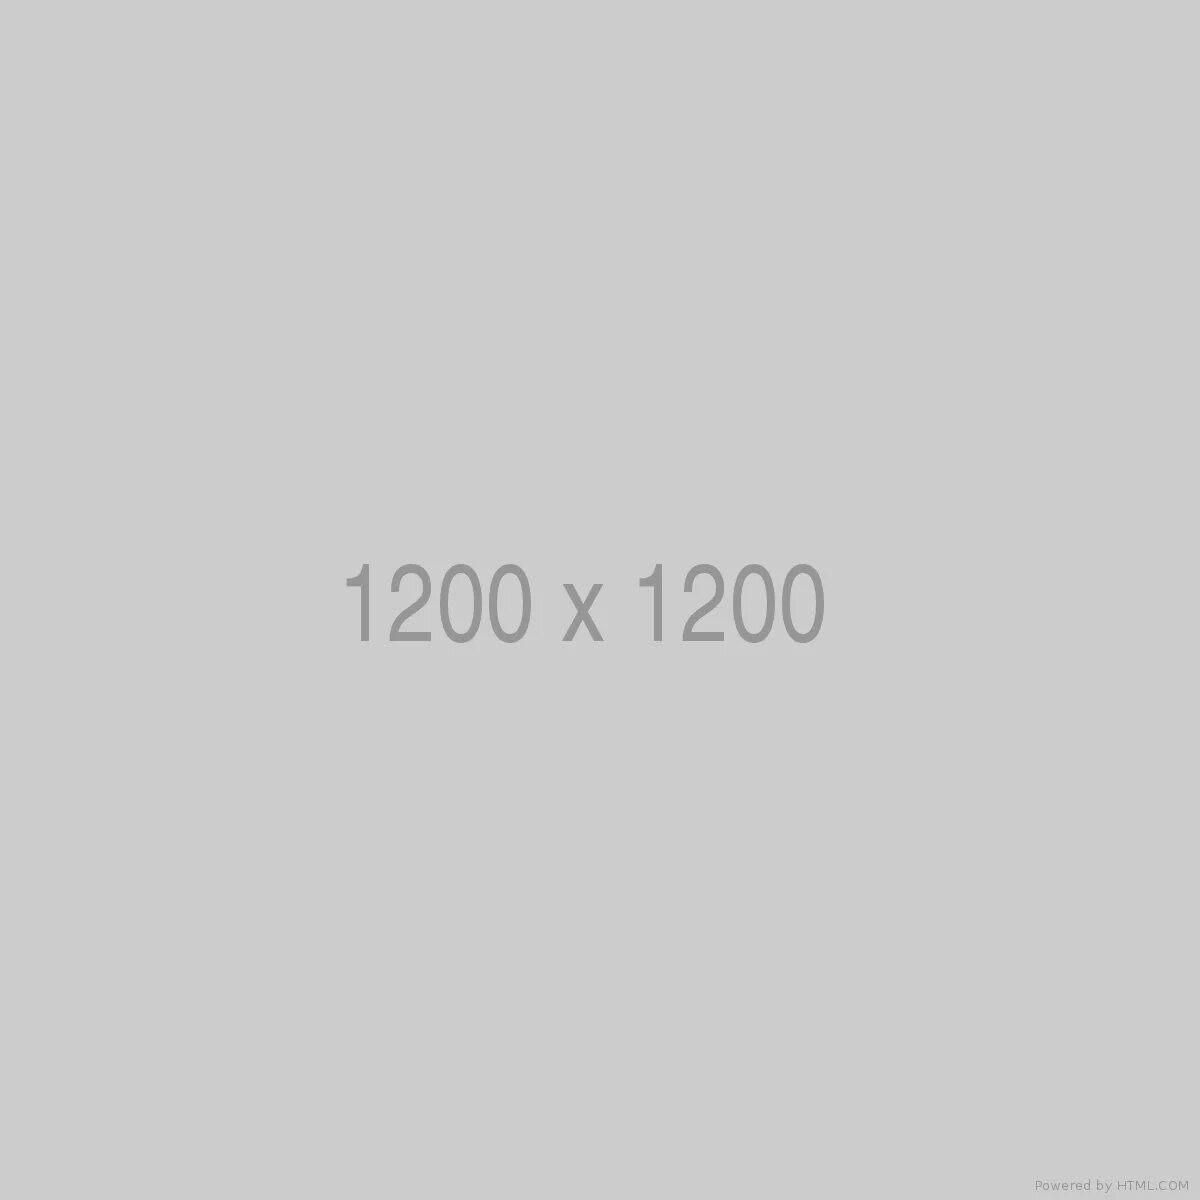 200 10 27. 200 На 200. 200 На 200 пикселей. Изображение 200x200. 200x200 картинки.